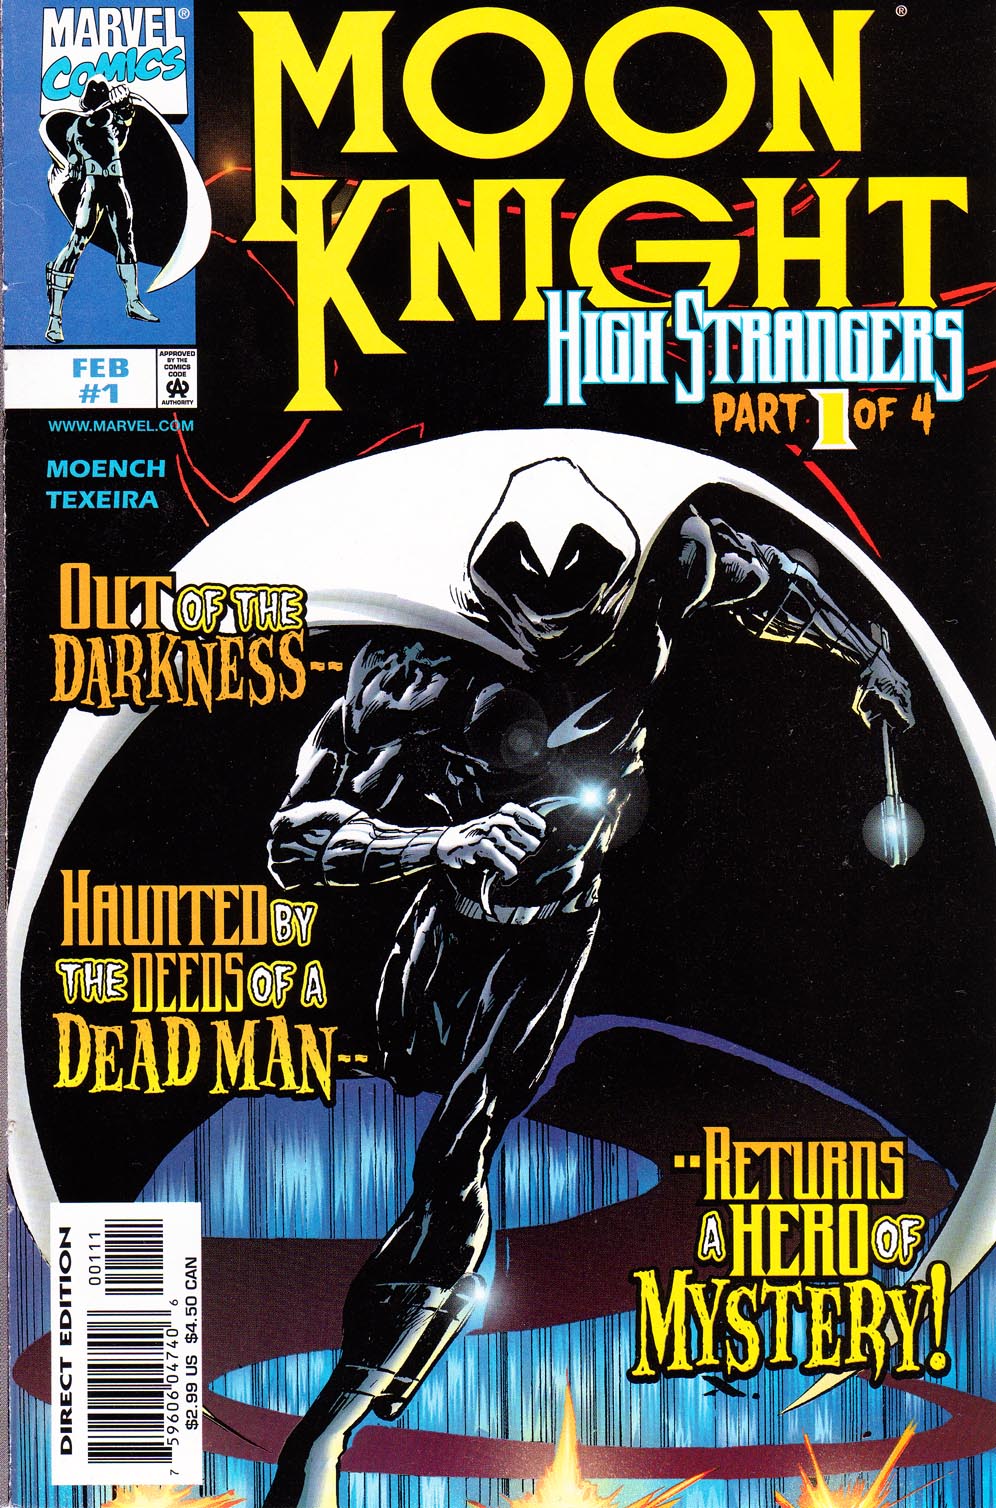 Moon Knight: High Strangers Issue #1 #1 - English 1